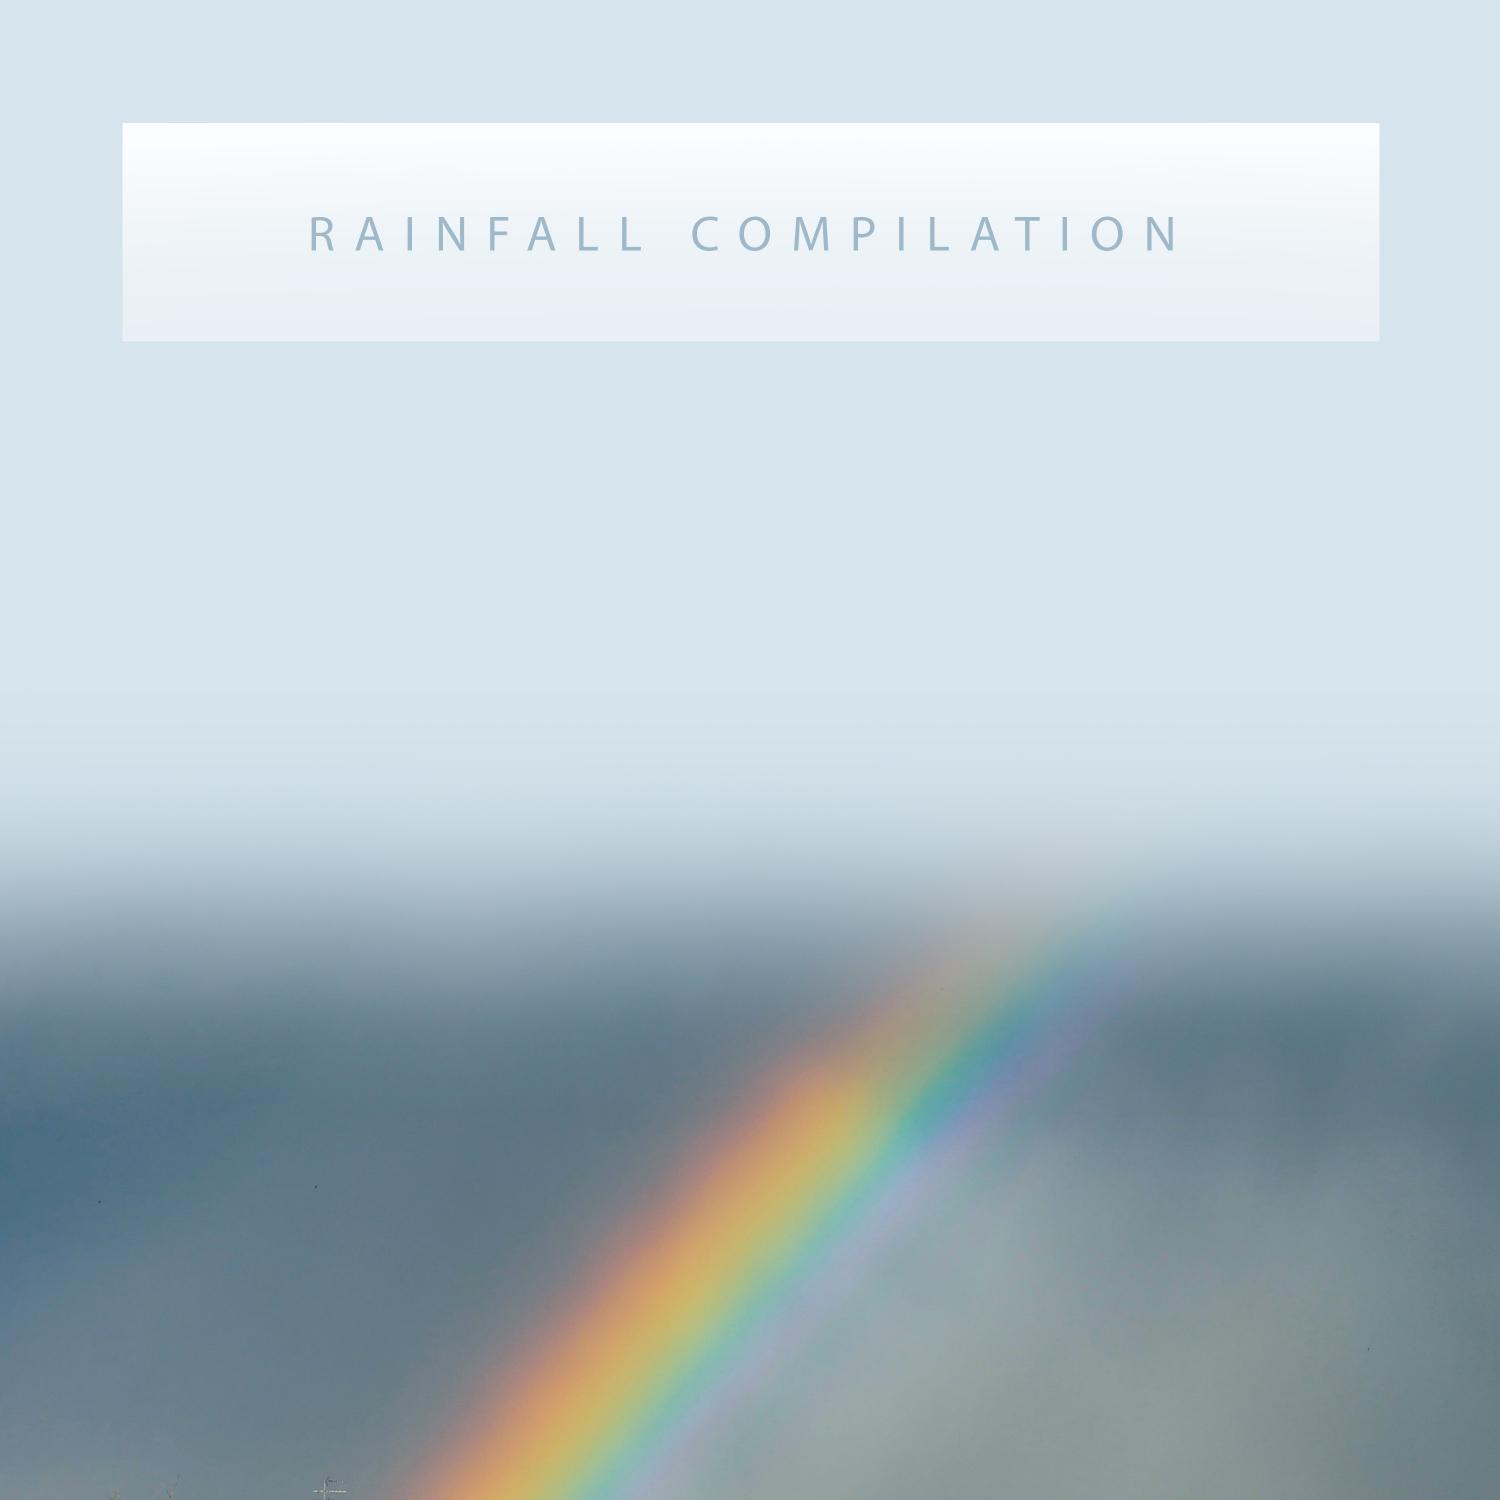 2018 Awe Inspiring Rainfall Compilation